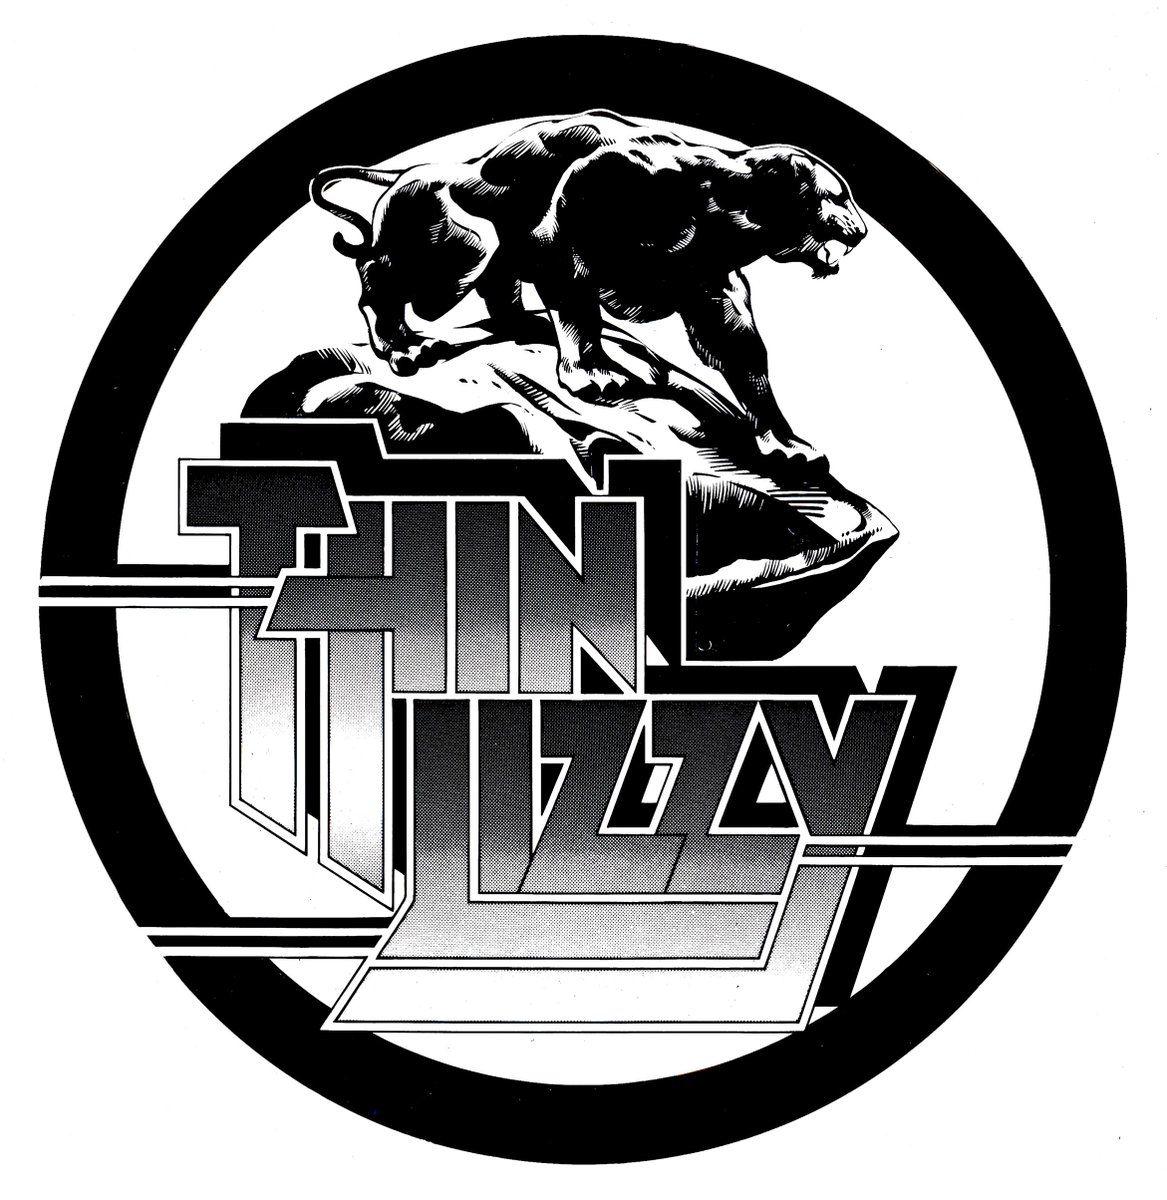 Thin Black and White Twitter Logo - JIM FITZPATRICK Lizzy Black Panther logo.1973. Pen